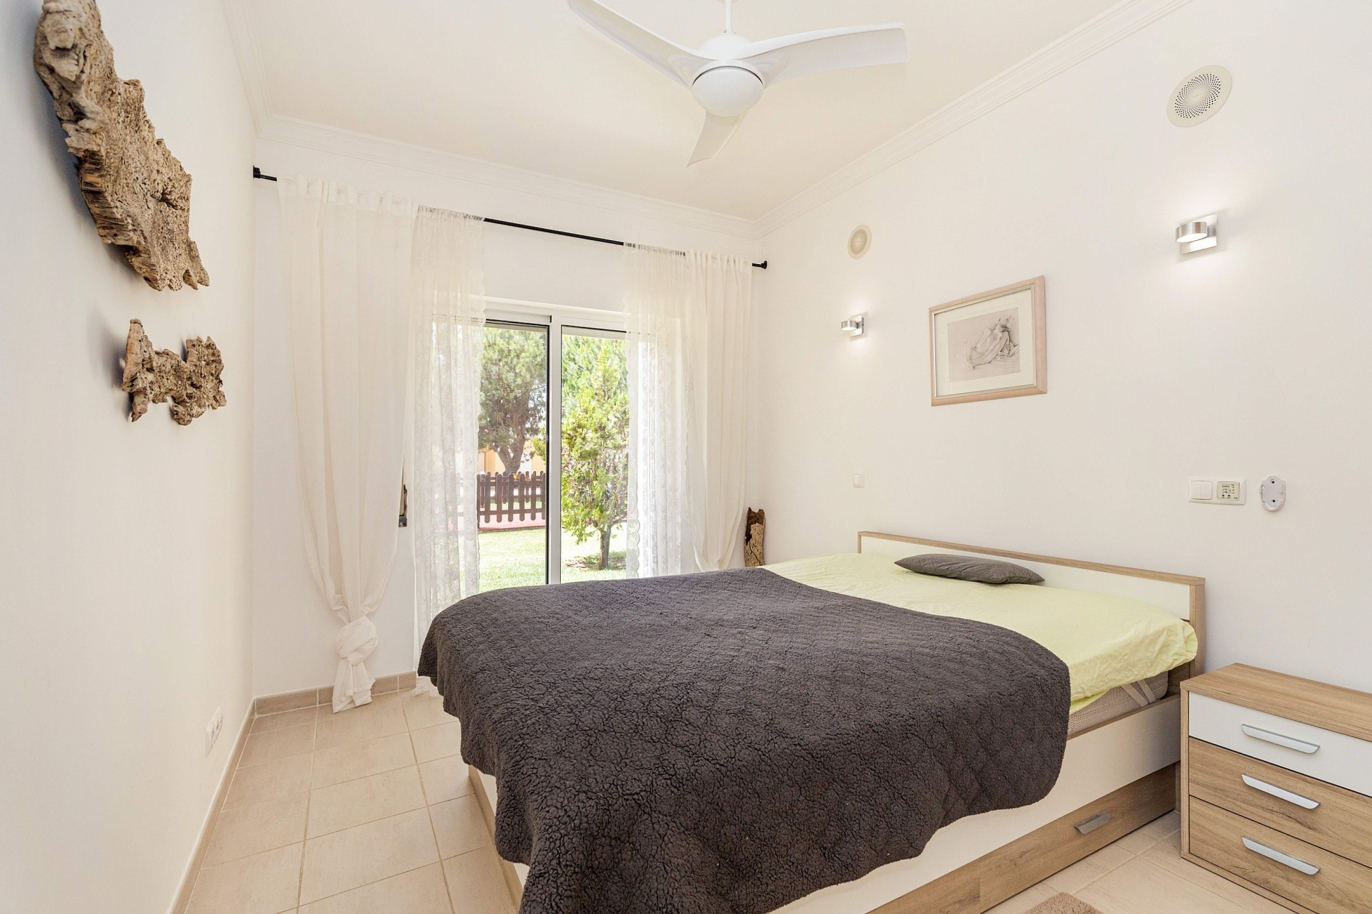 Apartamento T2, em condominio, para venda, Albufeira, Algarve_201453